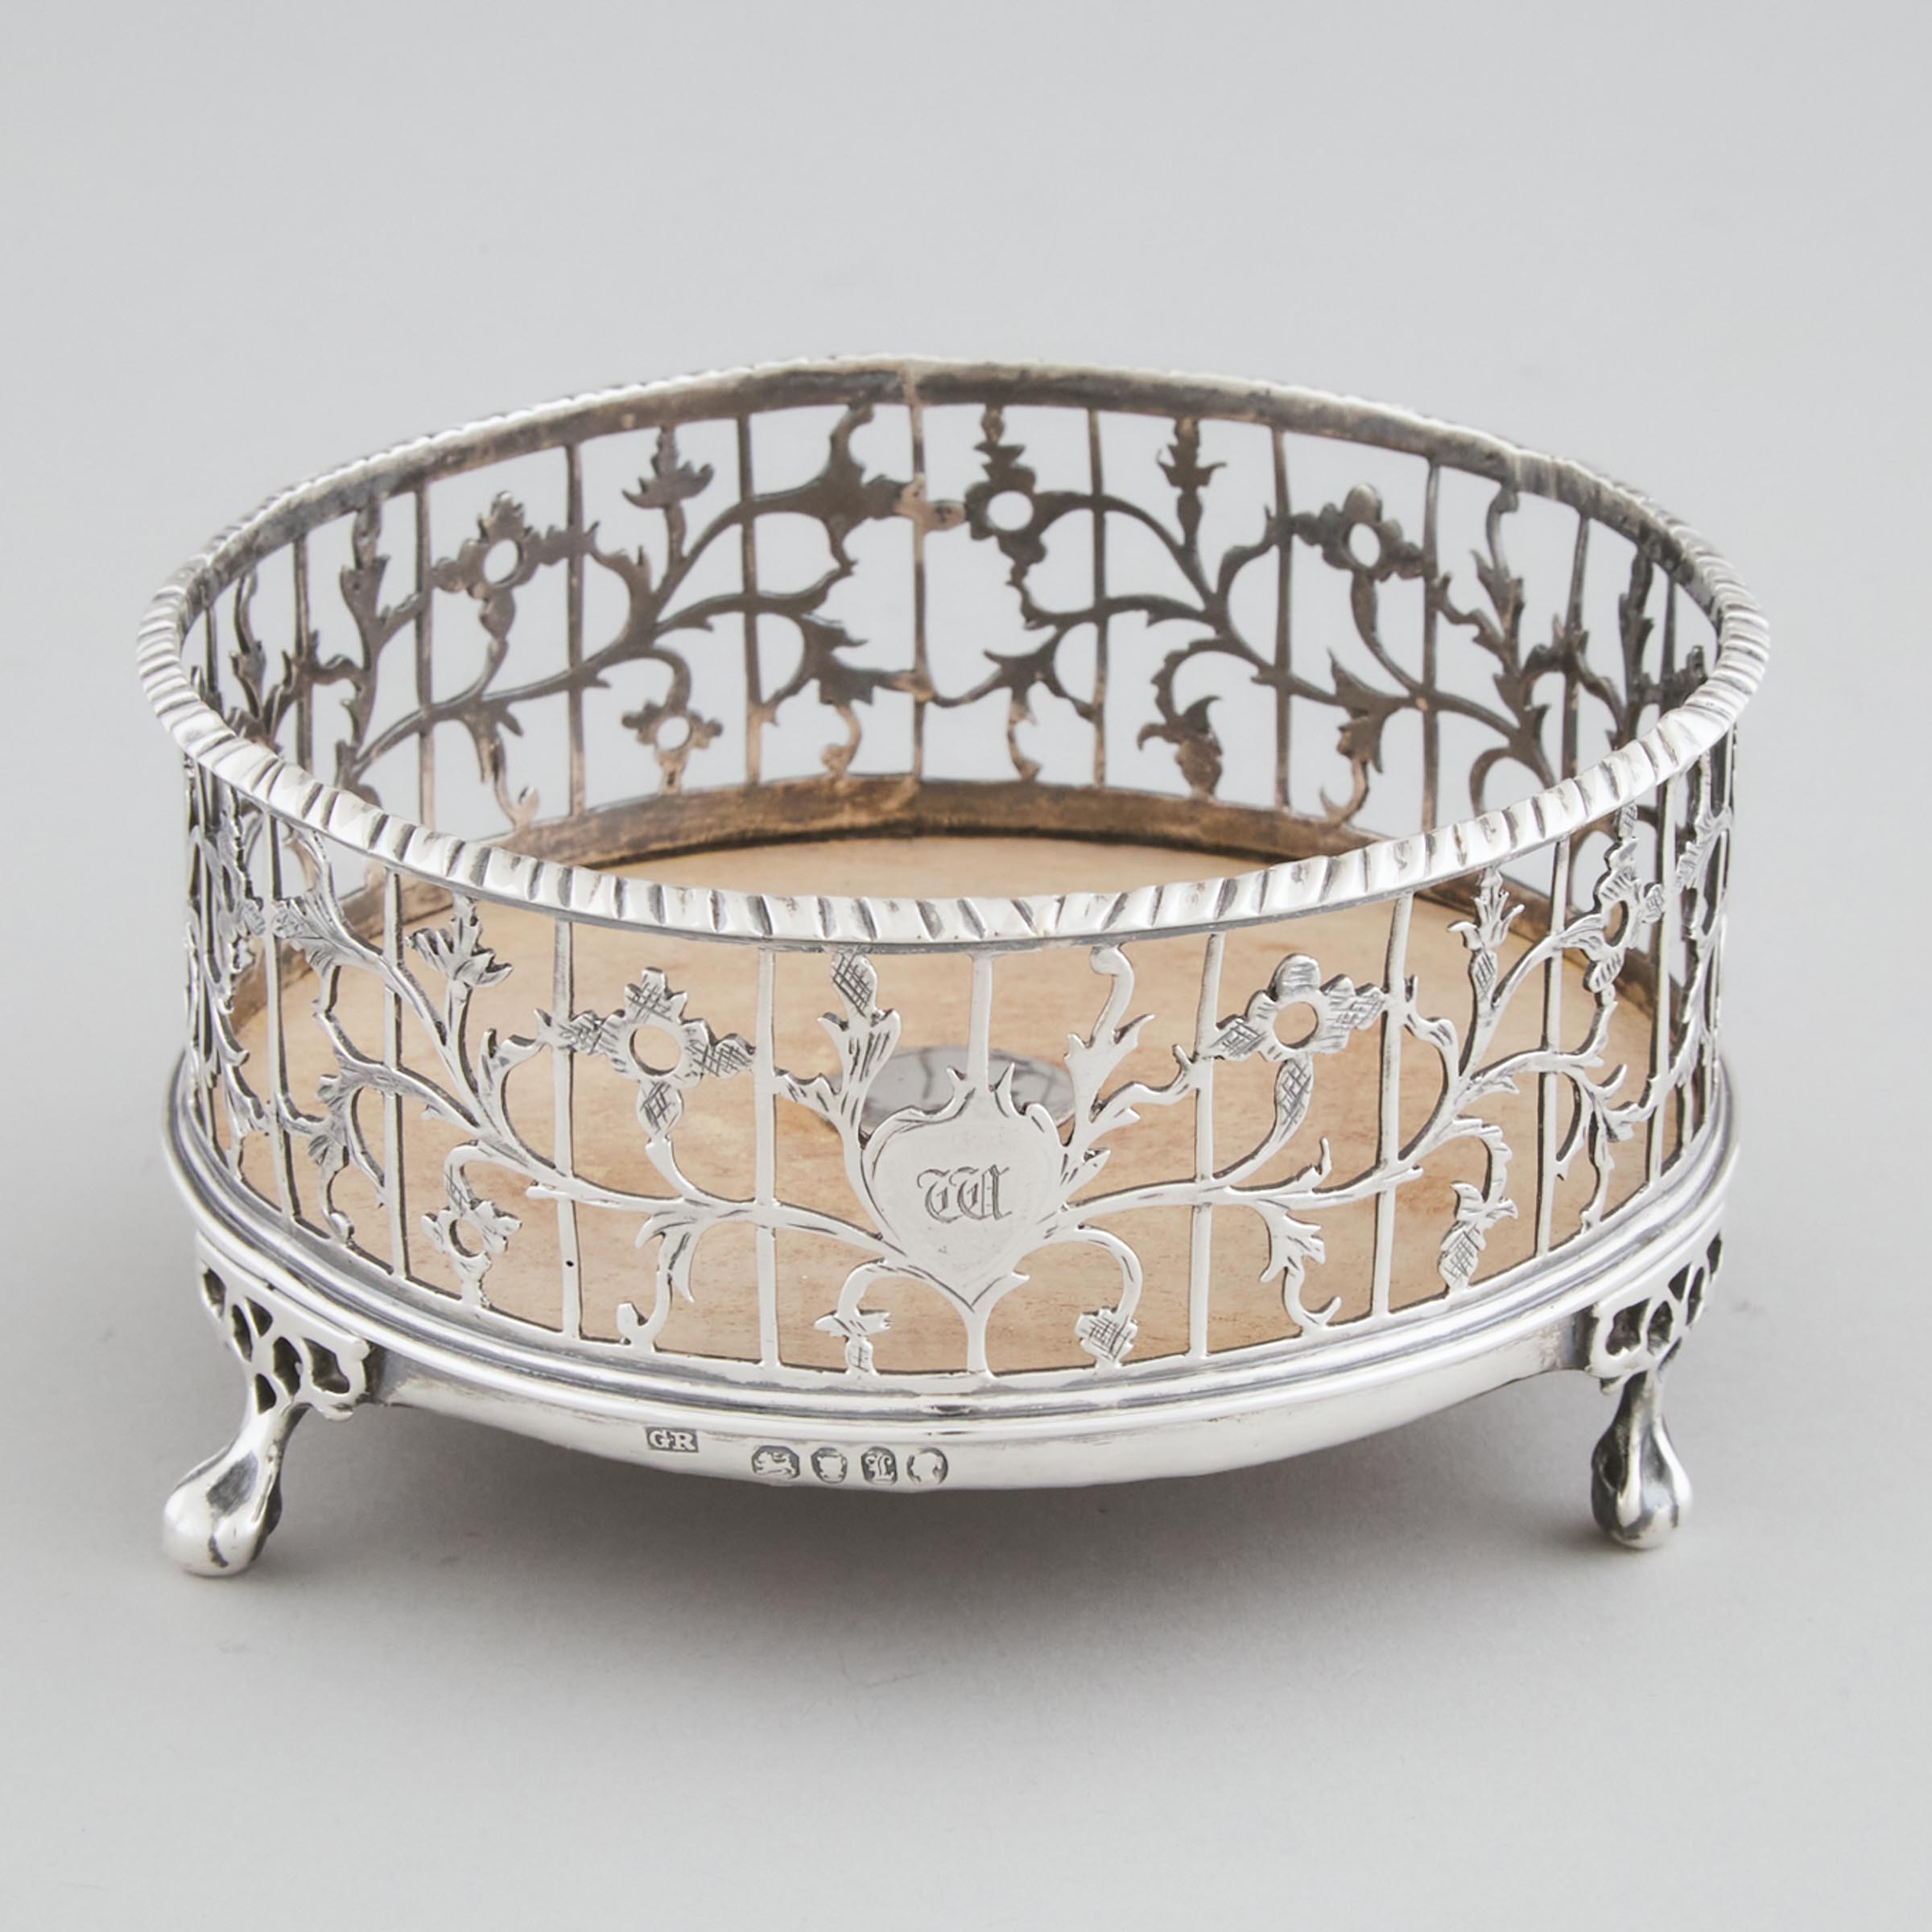 Victorian Silver Pierced Coaster, George Richards, London, 1846